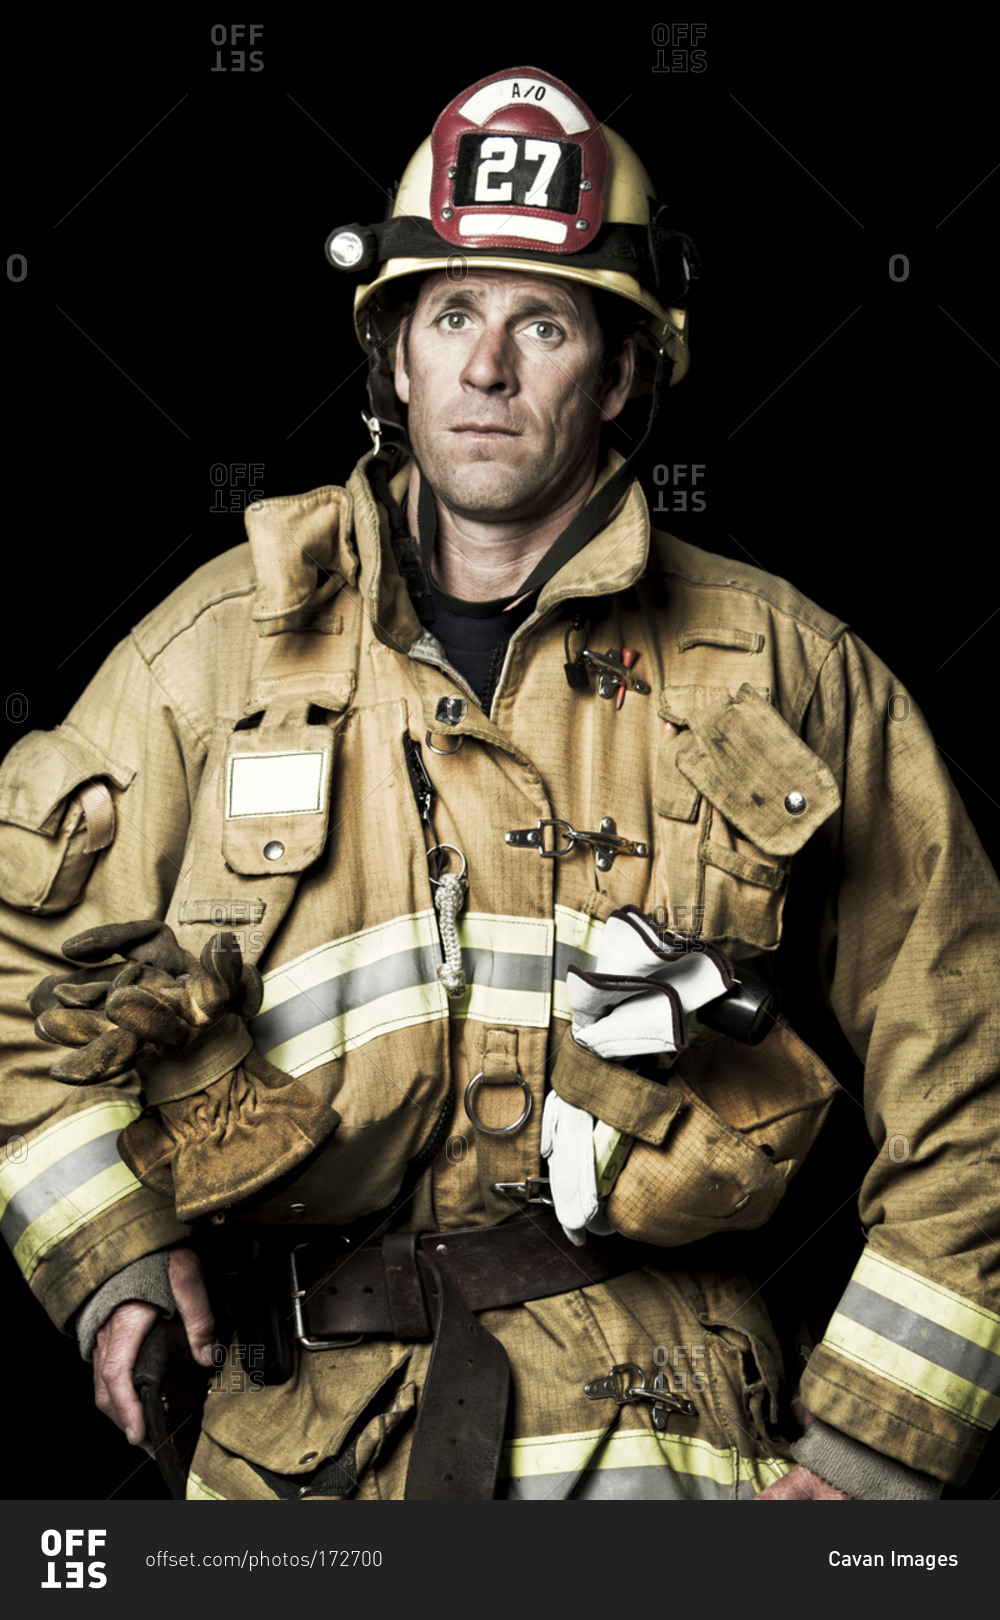 A portrait of a fireman